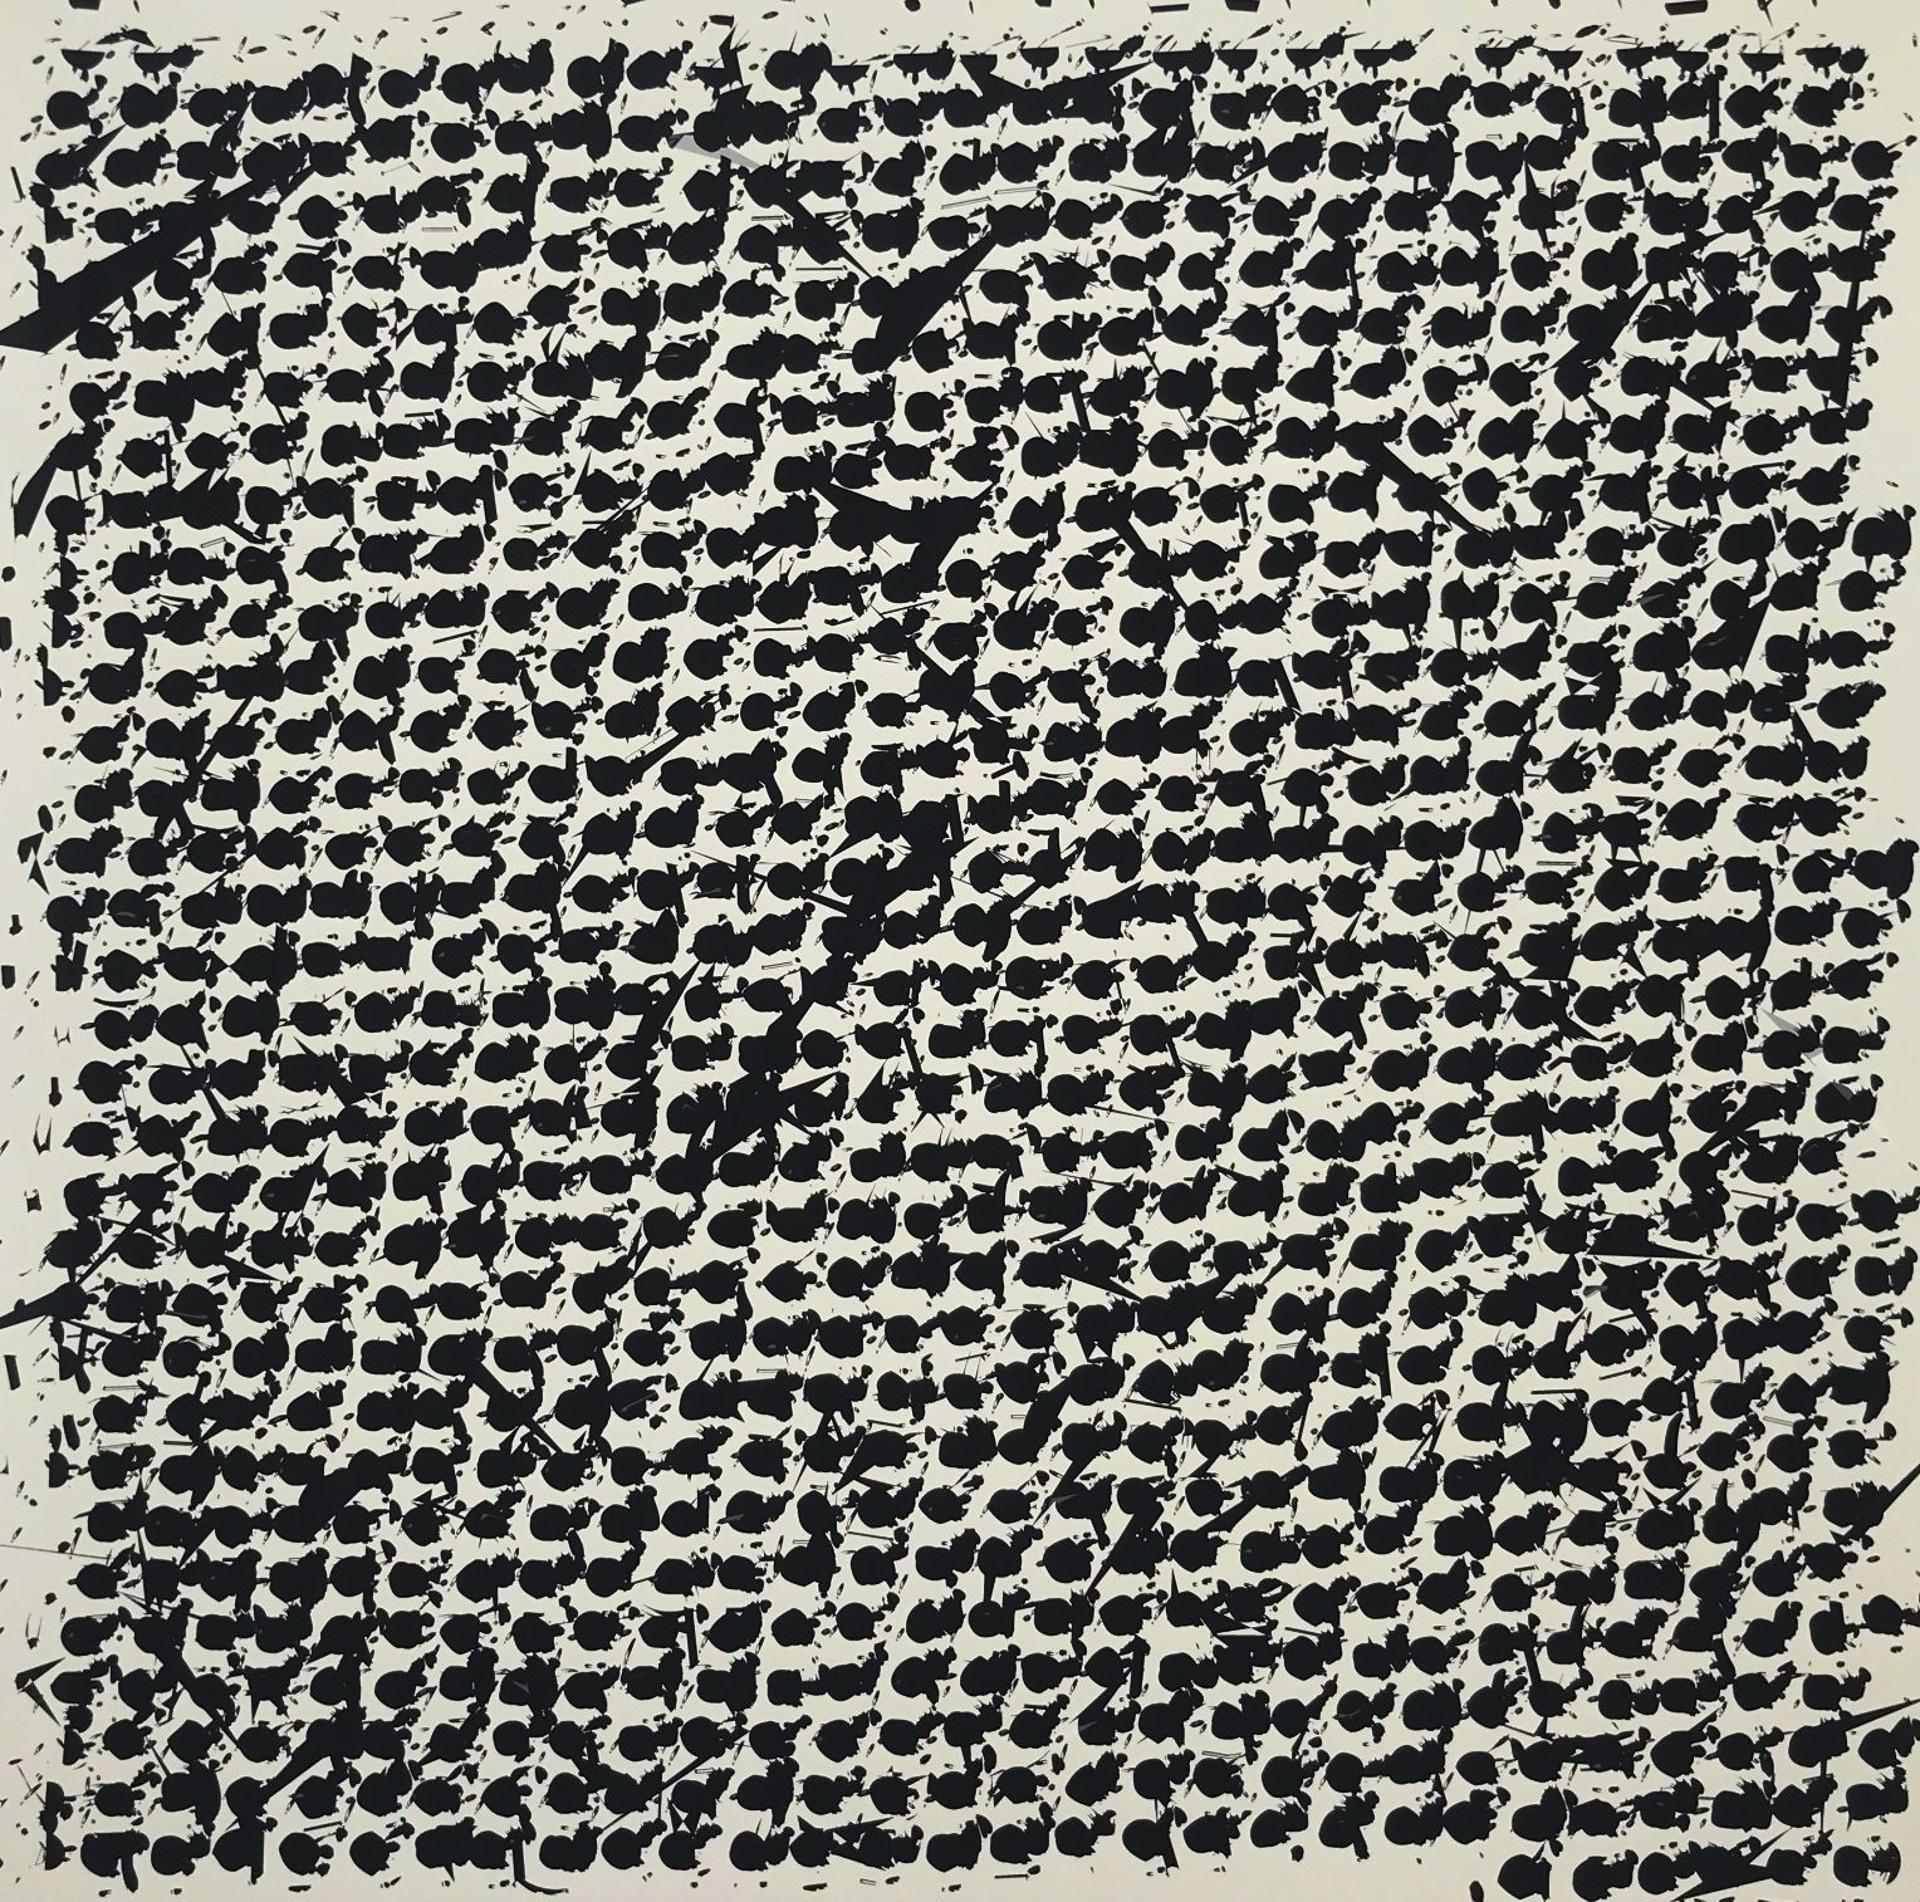 Abstract Print Peter Feldstein - 3-21-12-2